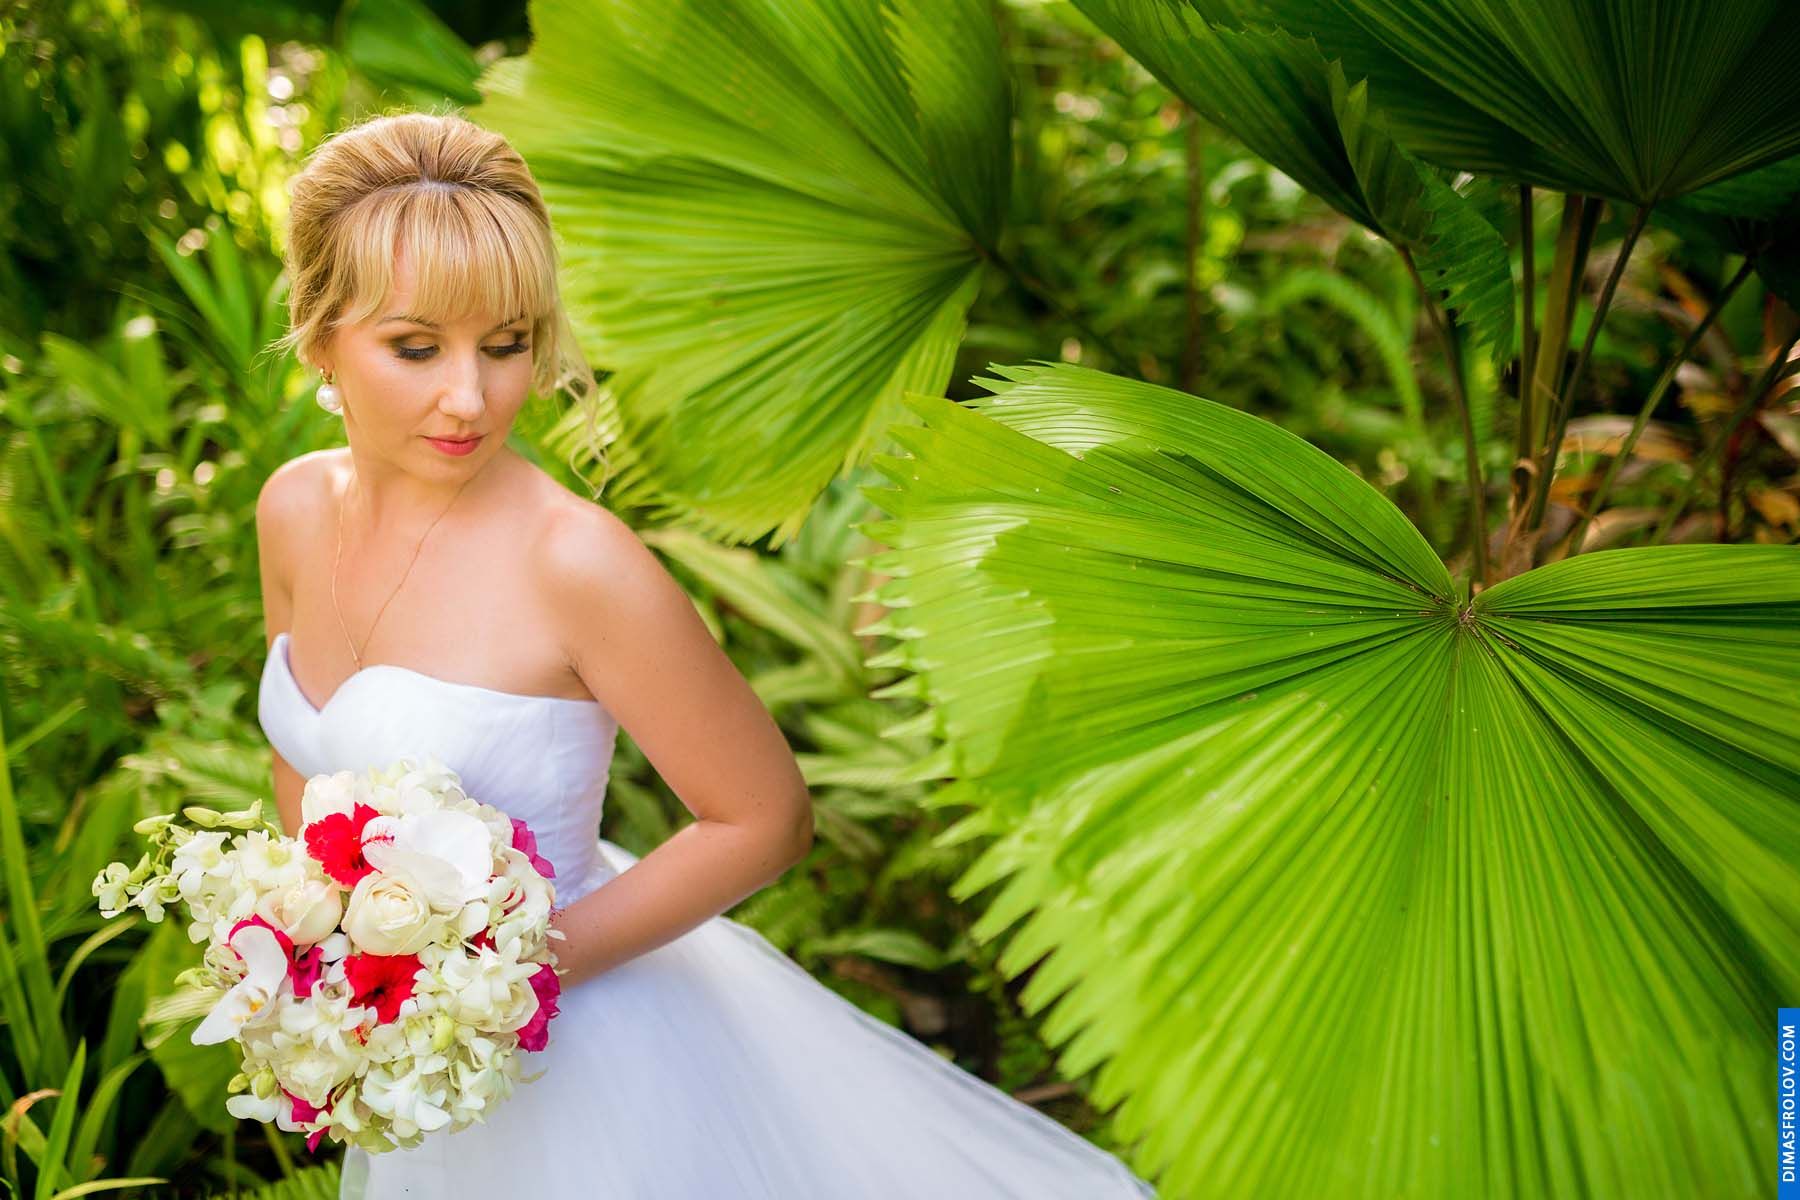 Bridal Bouquet for Tropical Wedding on Koh Samui. photographer Dimas Frolov. photo1222